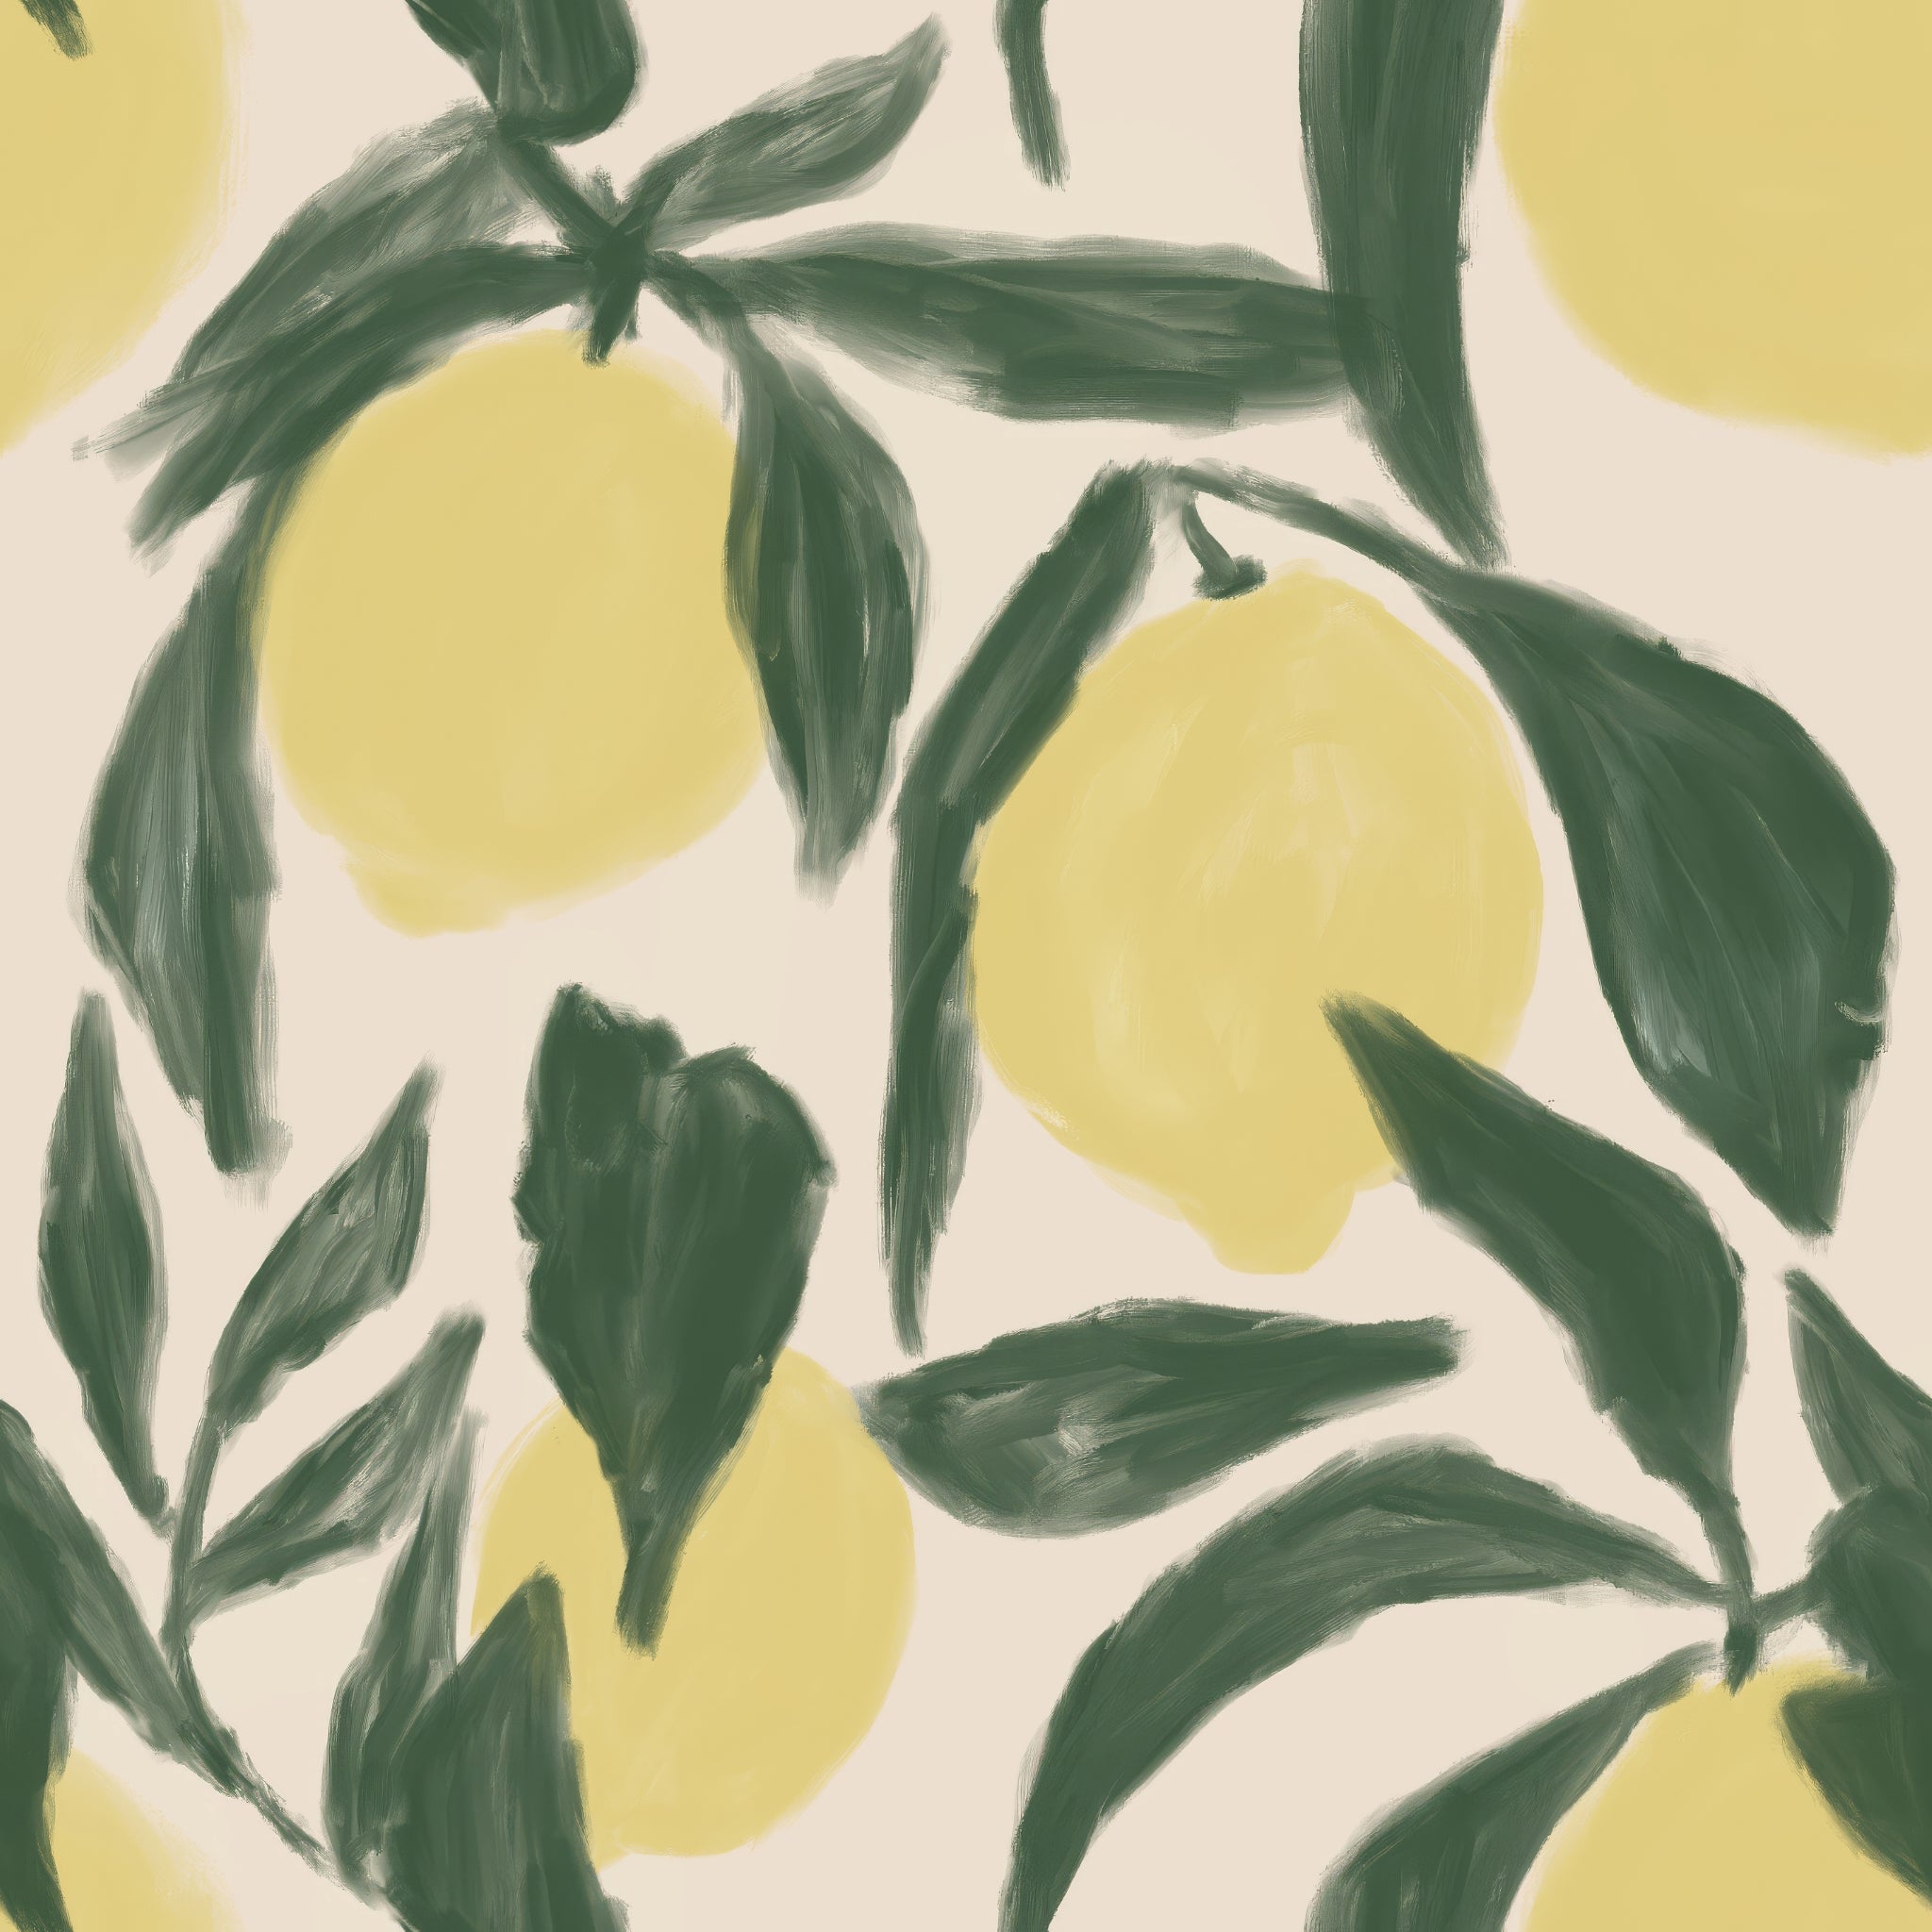 "Wall Blush 'Zesty Wallpaper' with lemon pattern installed in a modern kitchen, refreshing citrus theme."